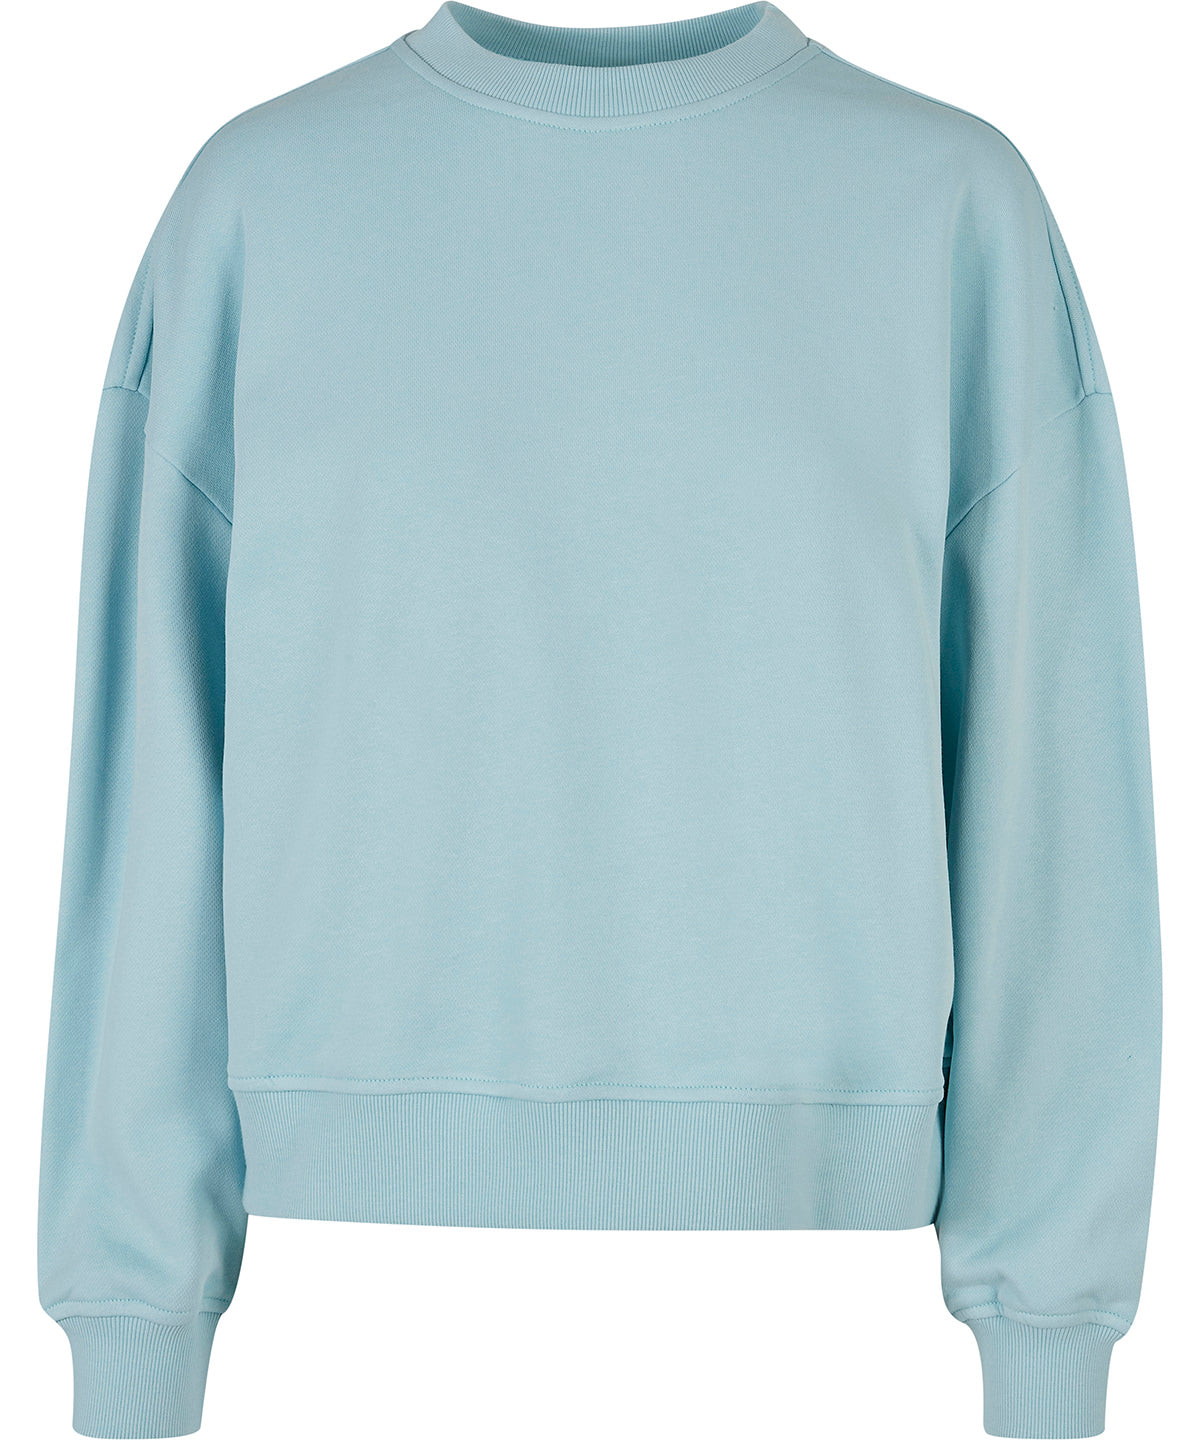 Personalised Sweatshirts - Black Build Your Brand Women’s oversized crew neck sweatshirt